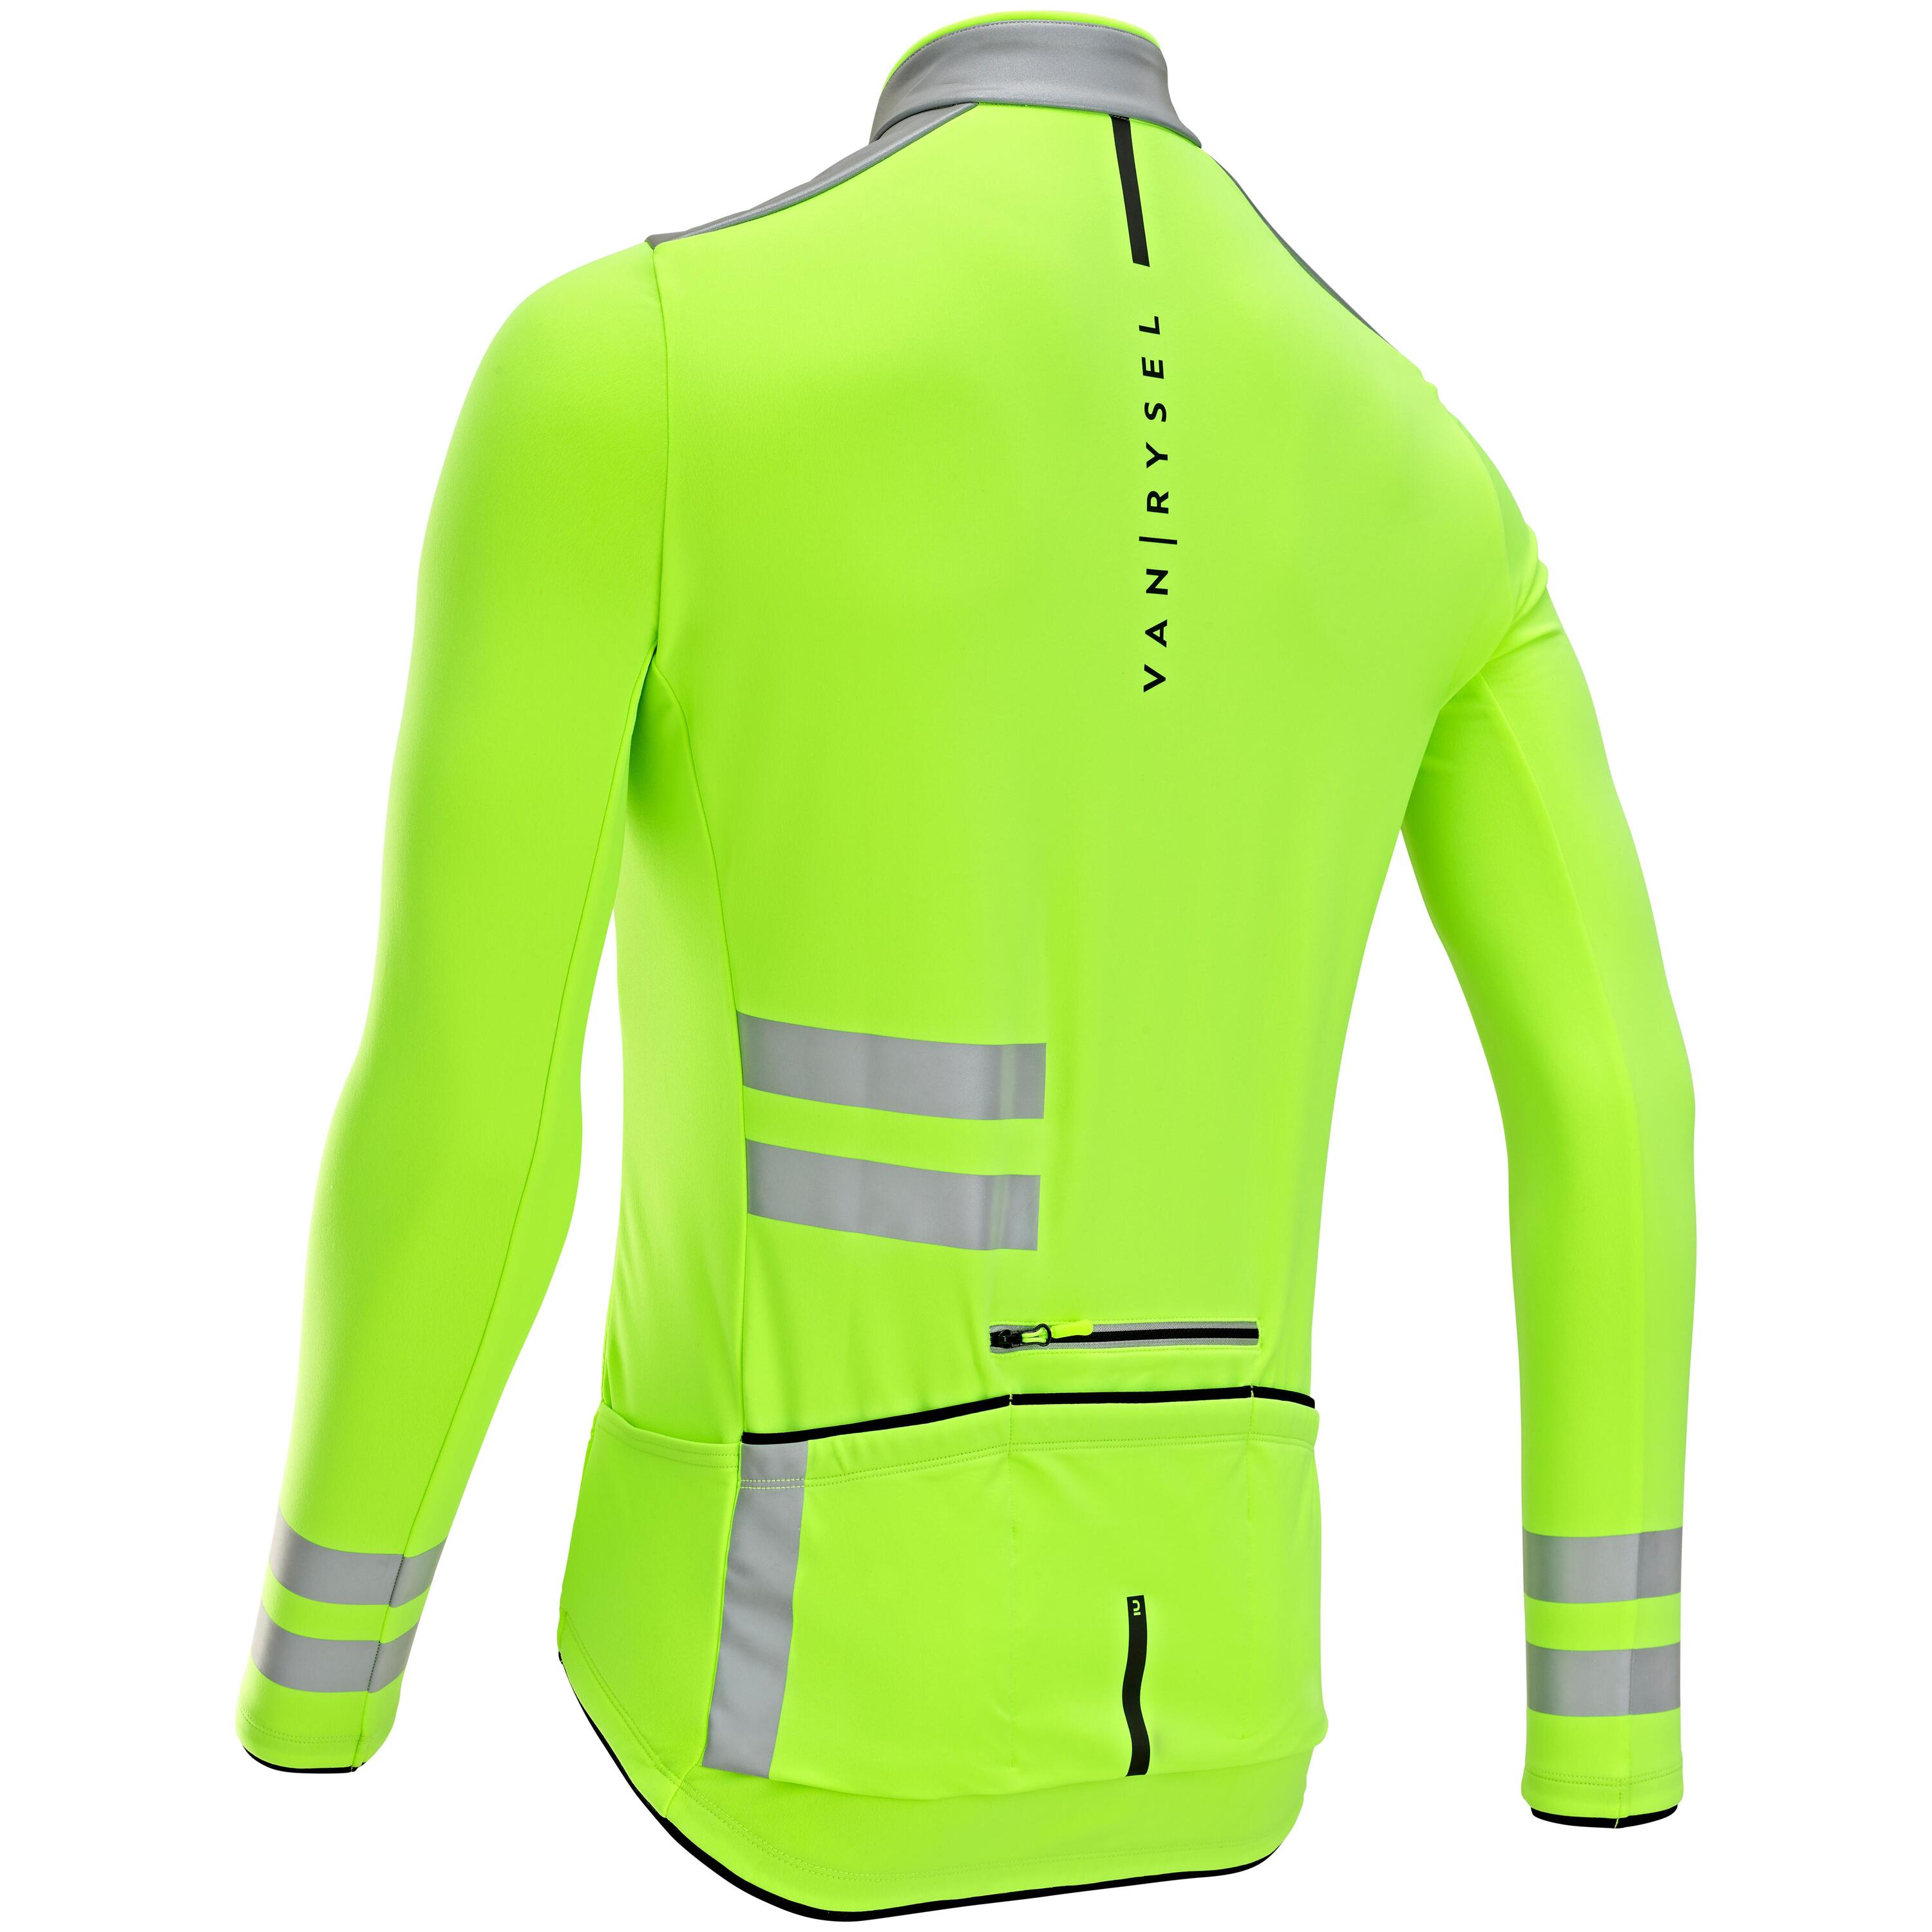 Men's Mid-Season Long-Sleeved Road Cycling Jersey RC500 Visible EN17353 3/8